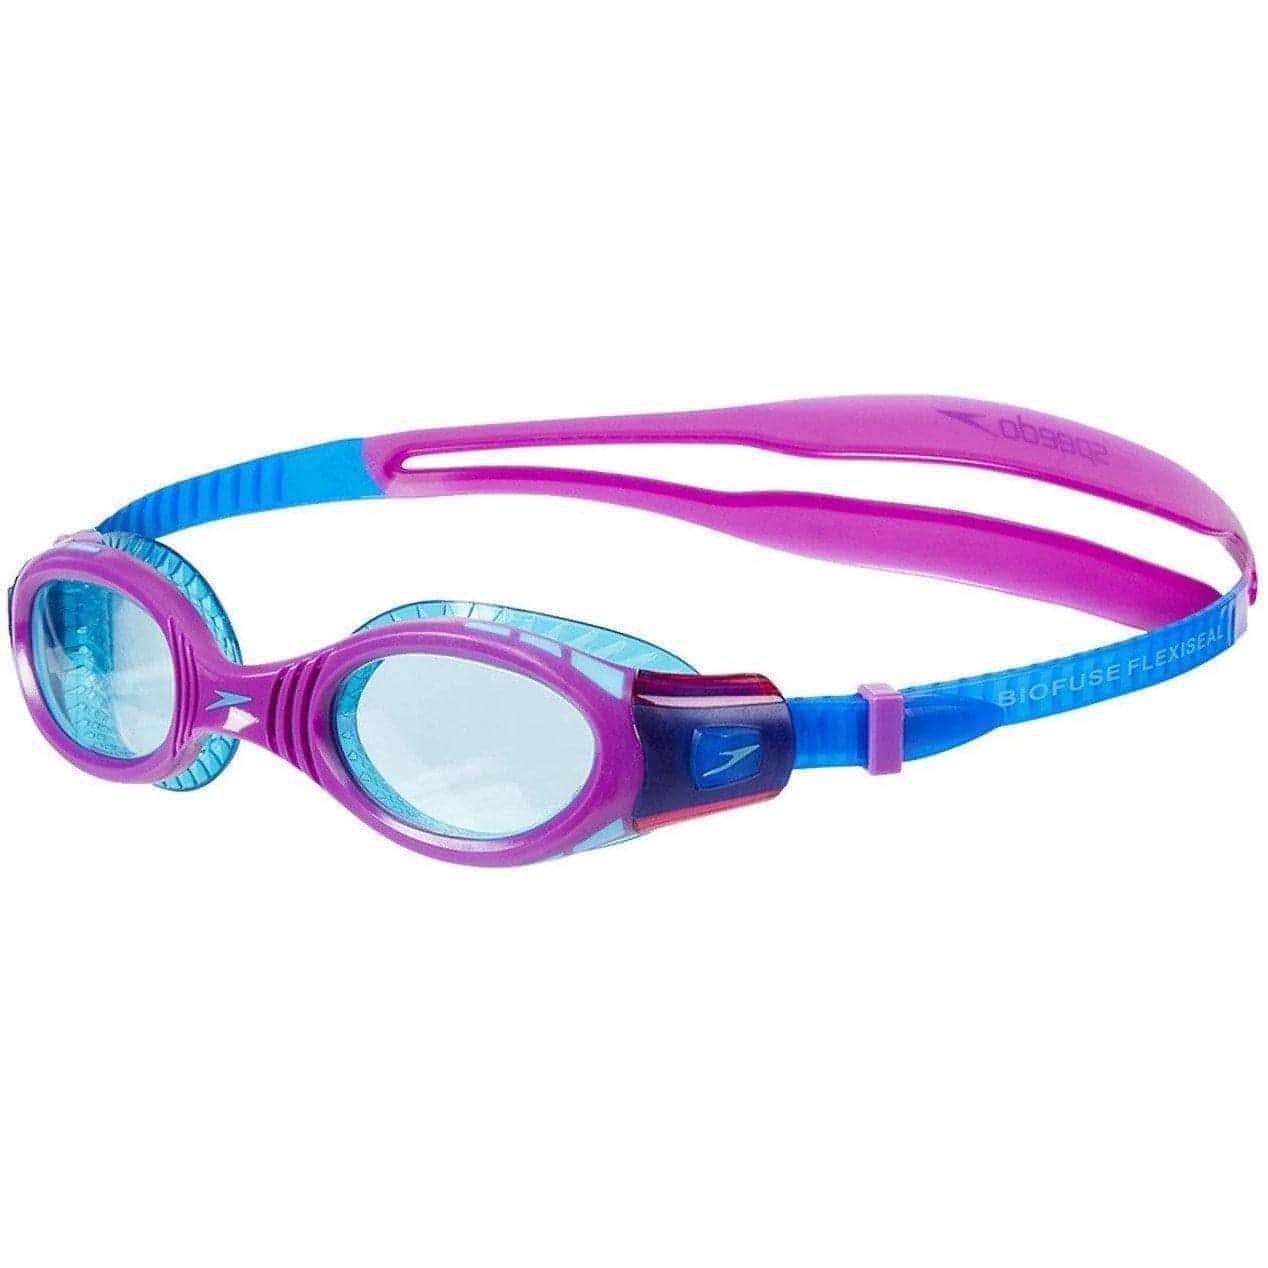 Speedo Futura Biofuse Flexiseal Junior Swimming Goggles - Purple 5054977031159 - Start Fitness